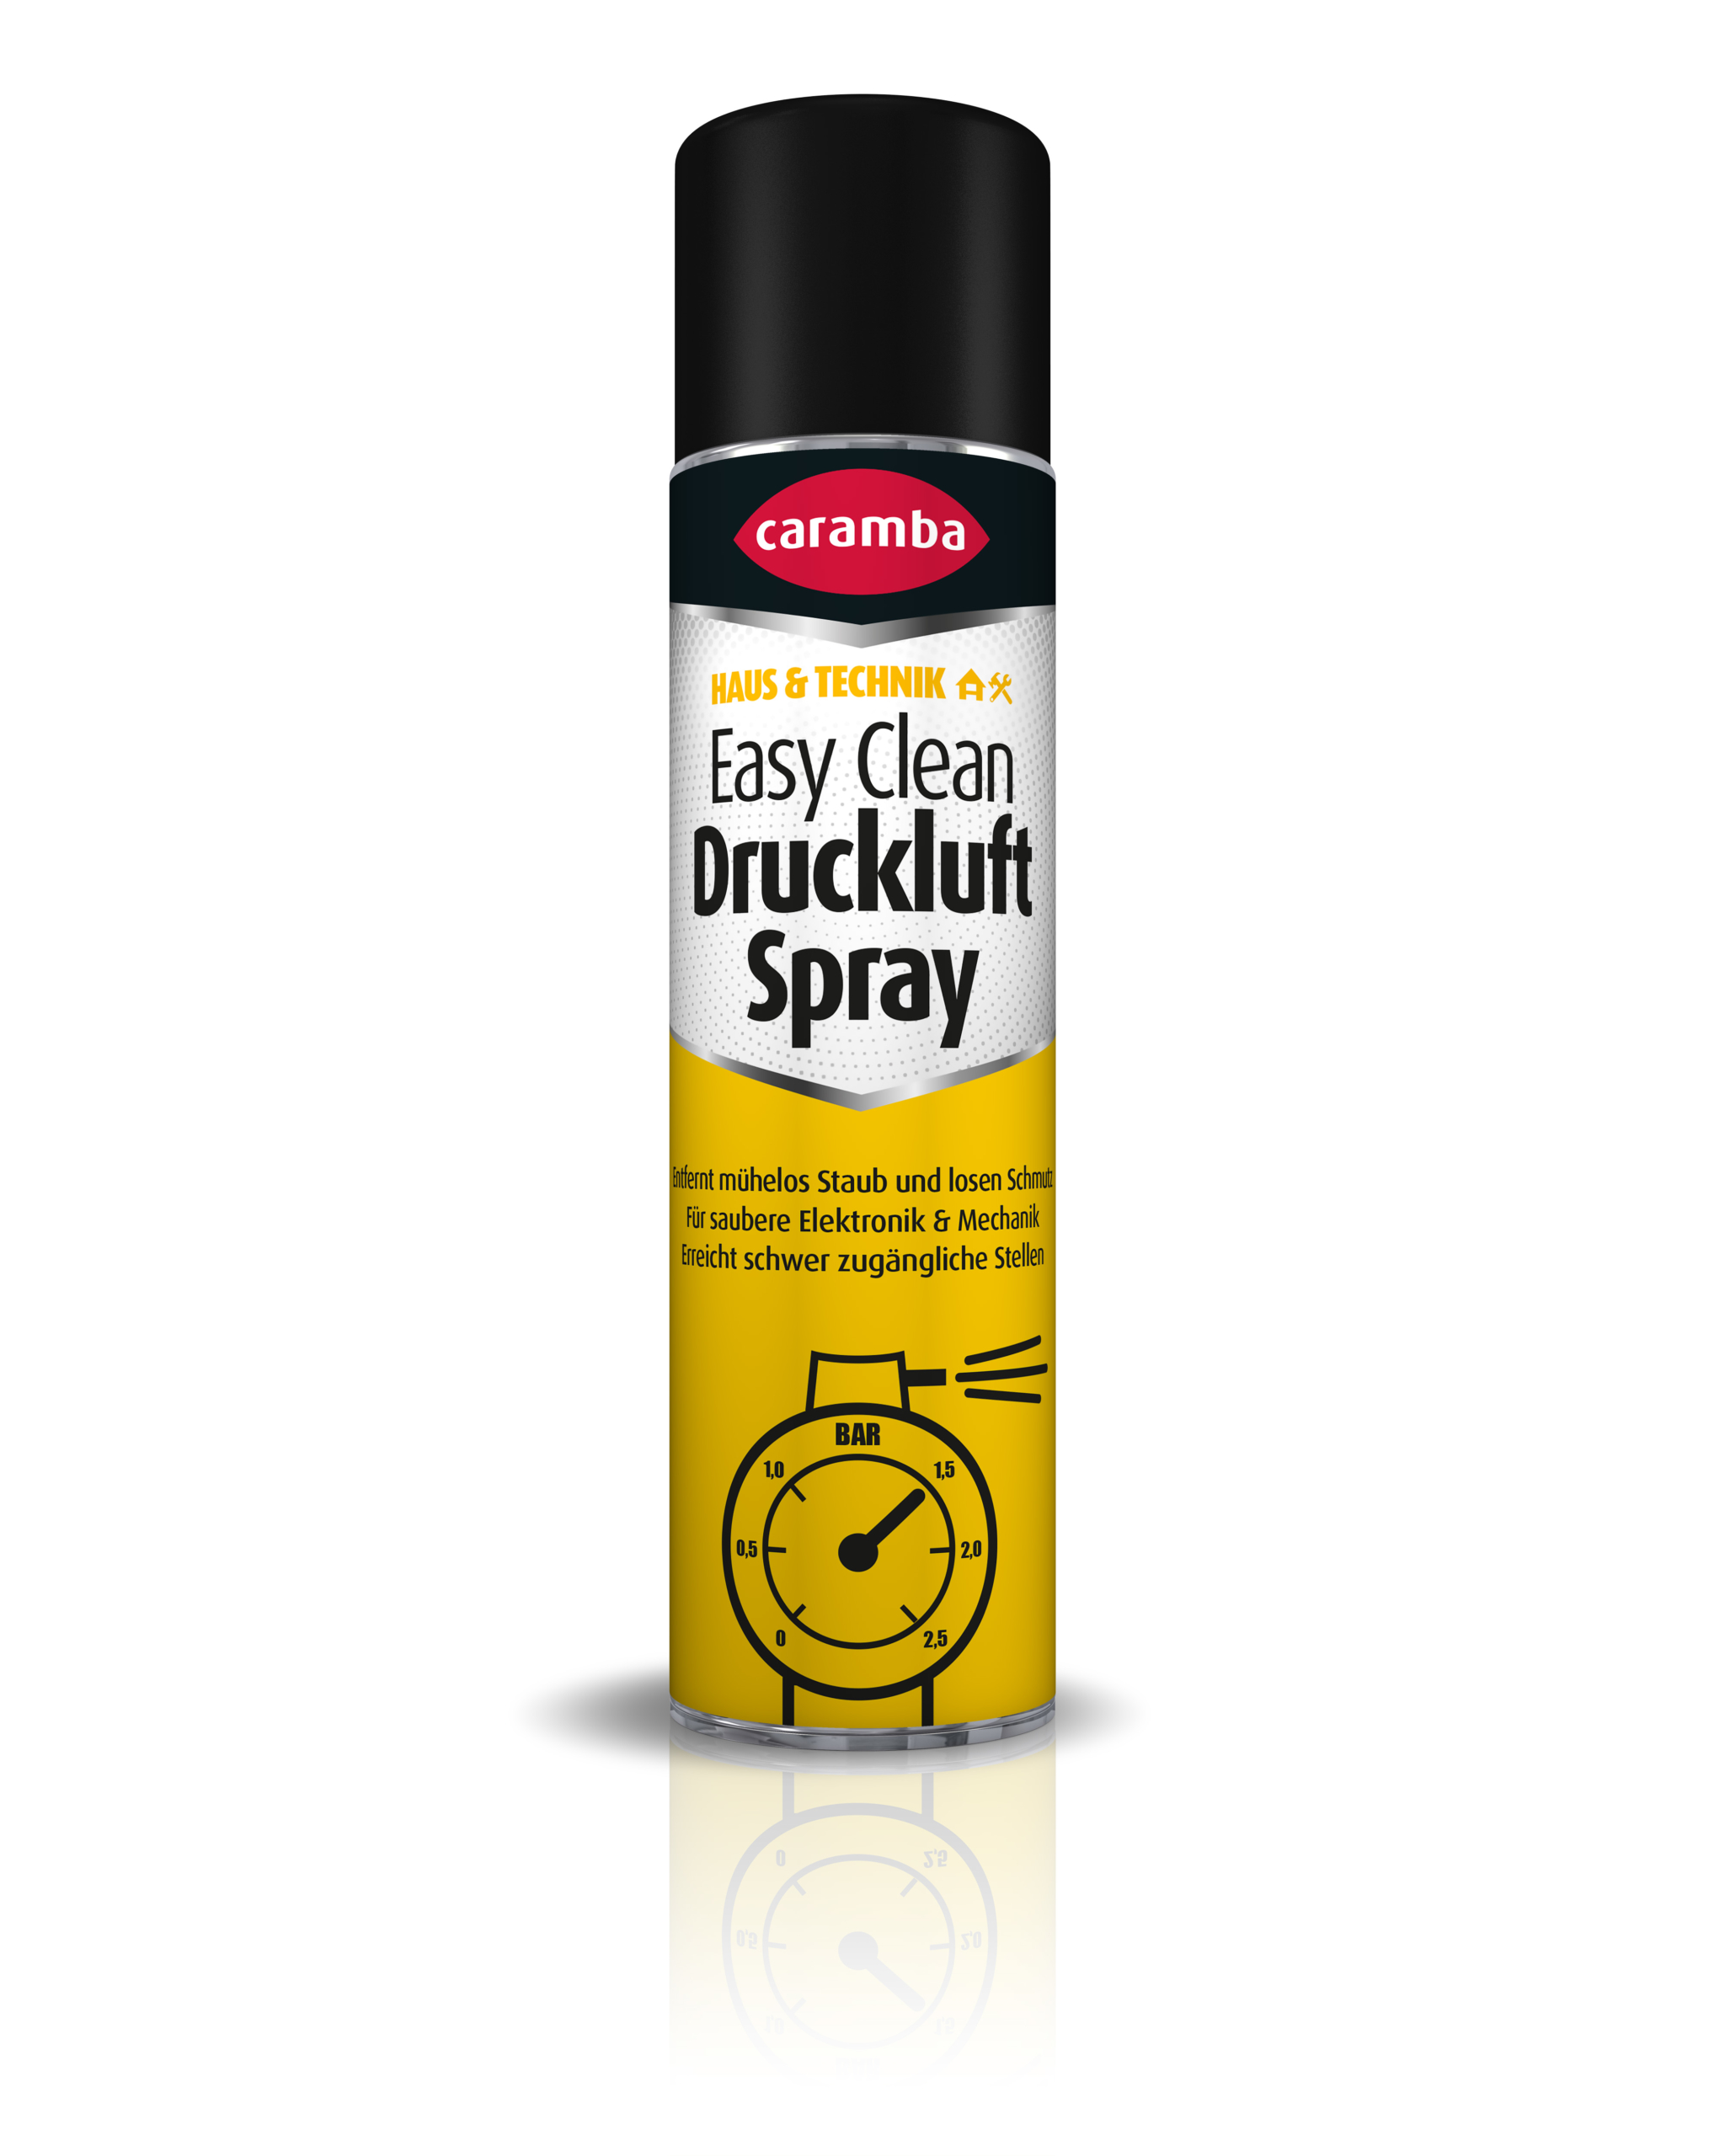 Easy Clean Druckluft Spray